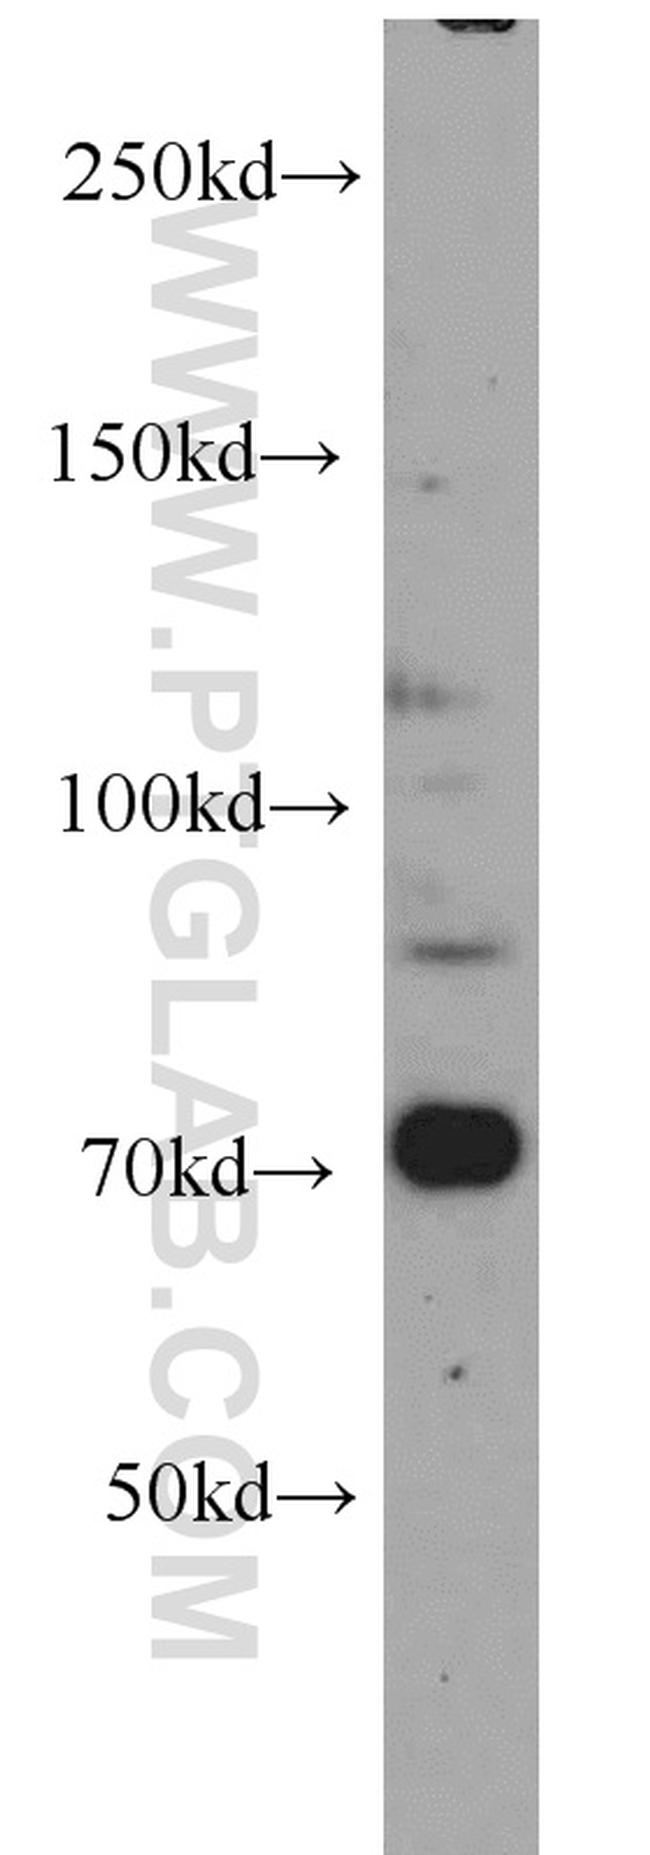 androgen receptor Antibody in Western Blot (WB)